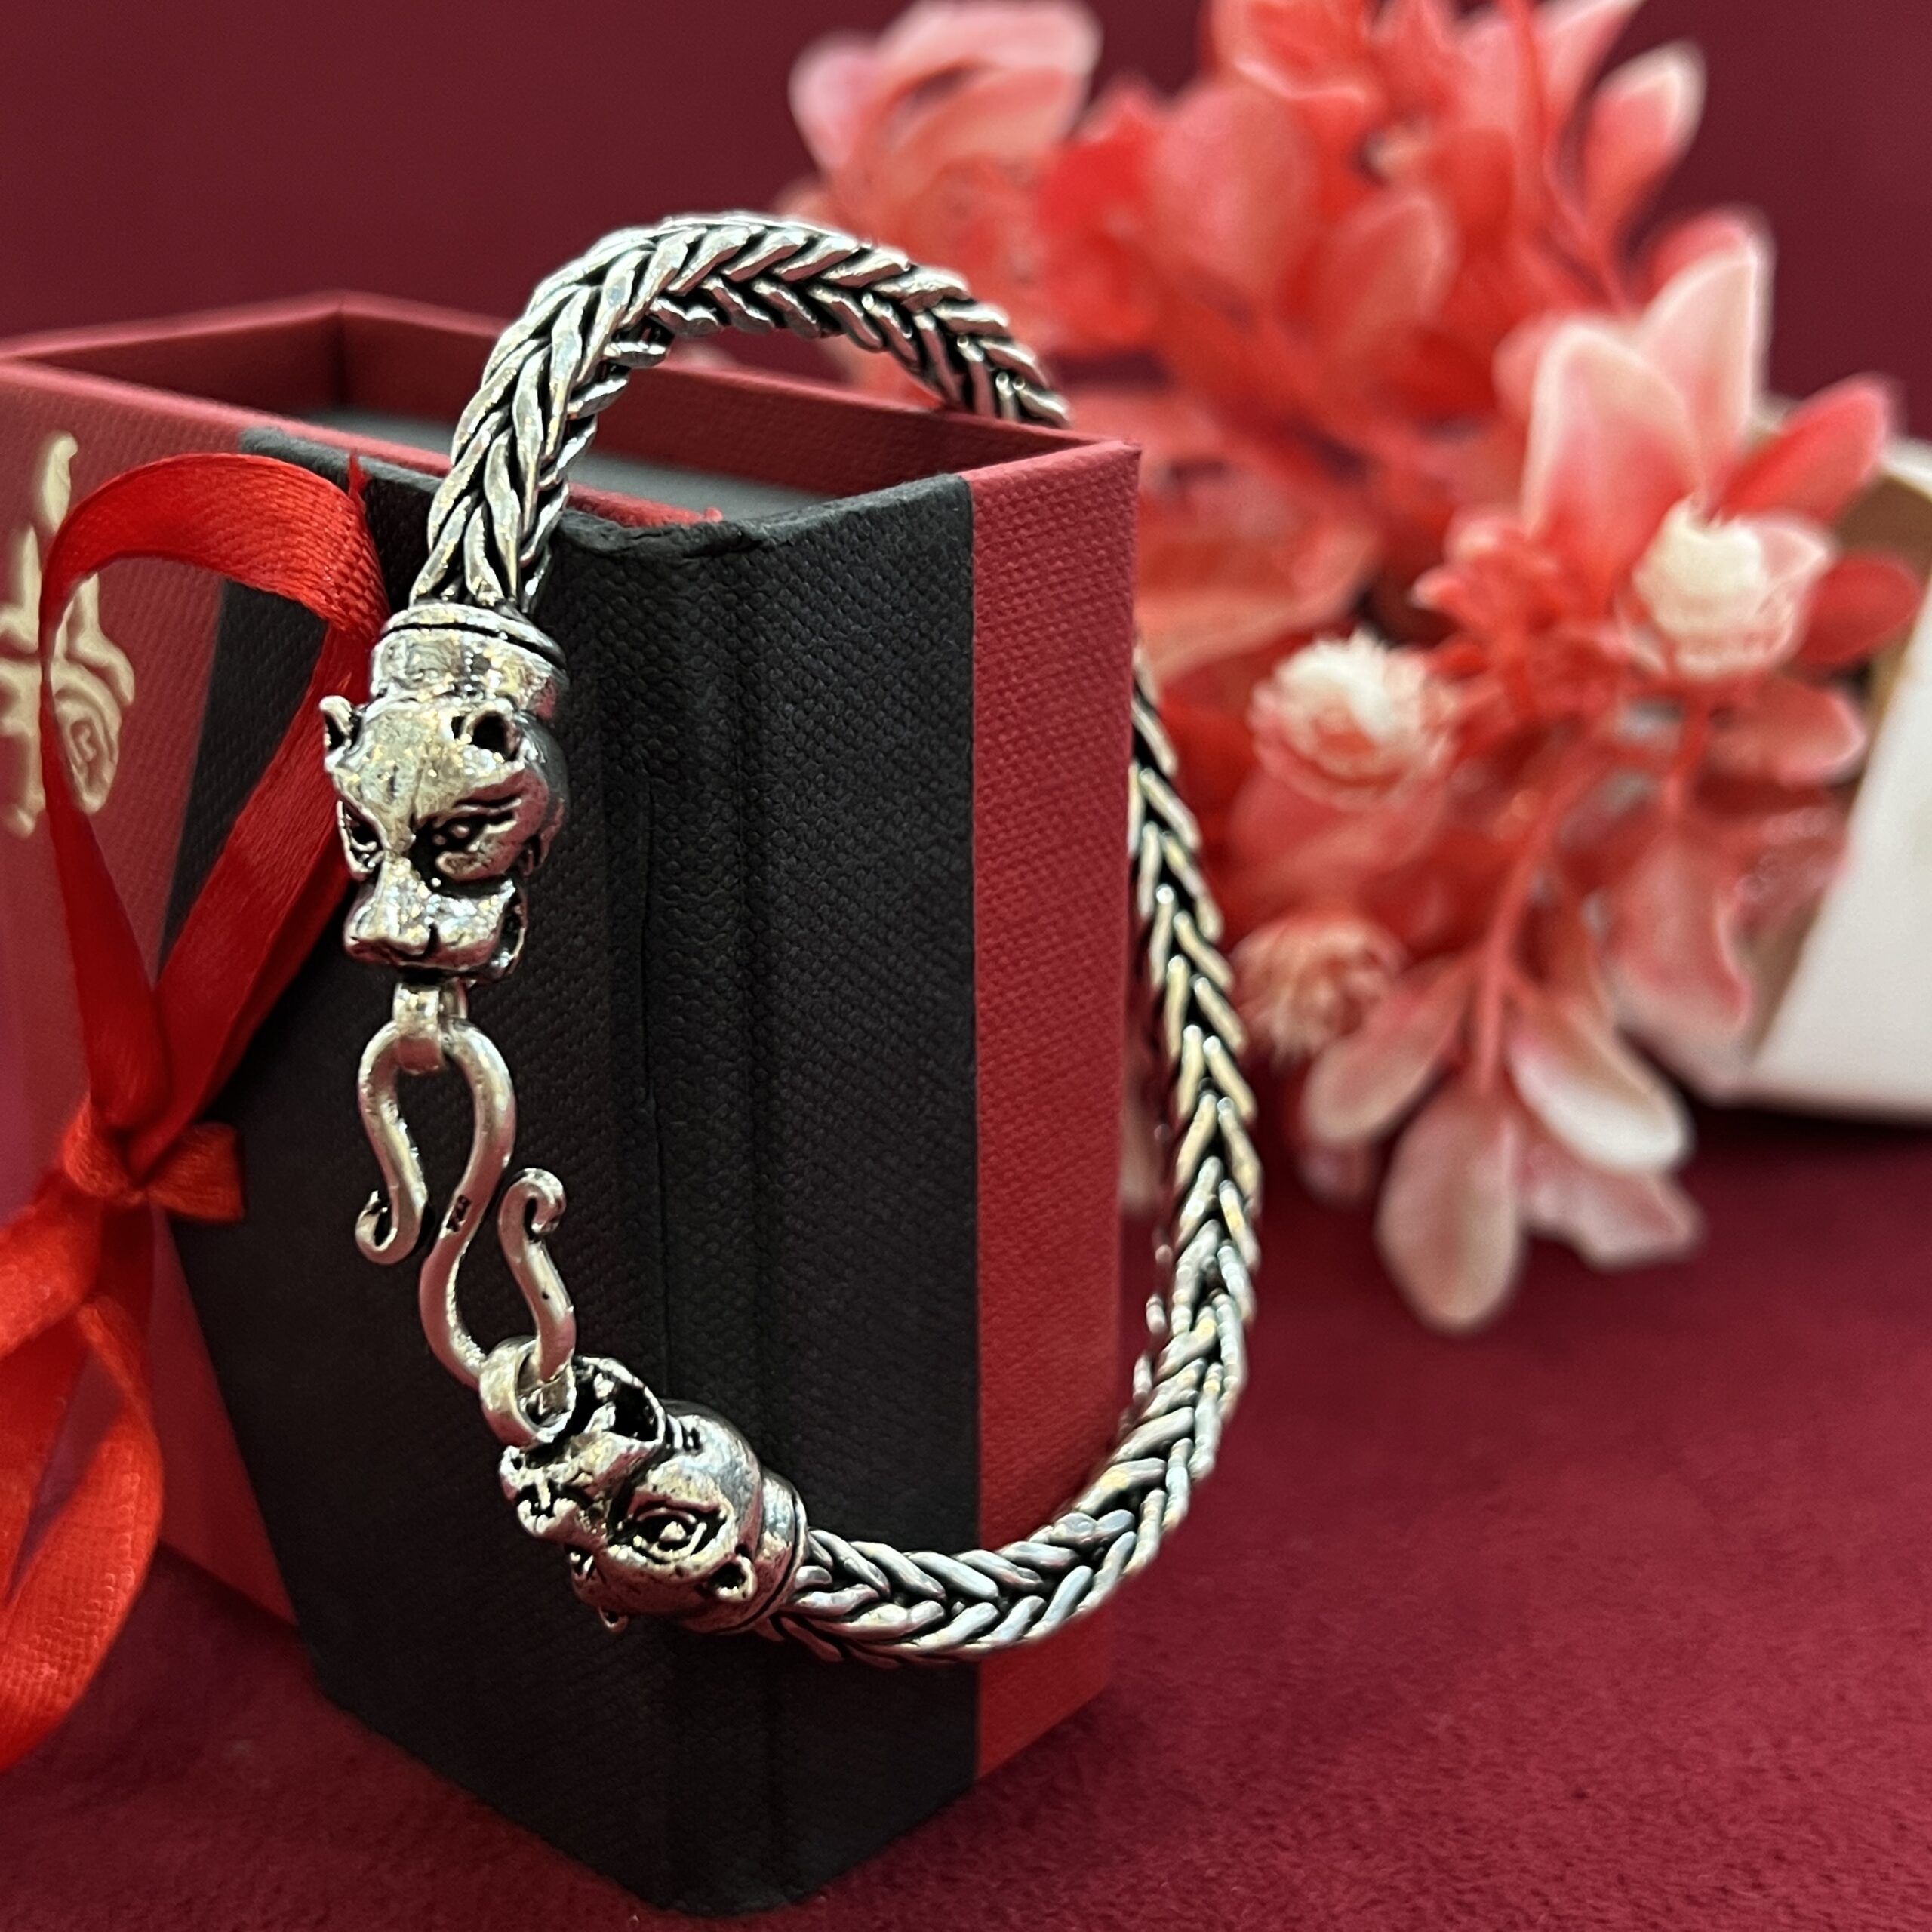 Tree of life bracelet for Men - Mens Jewelry Black Bracelet for him - Nadin  Art Design - Personalized Jewelry